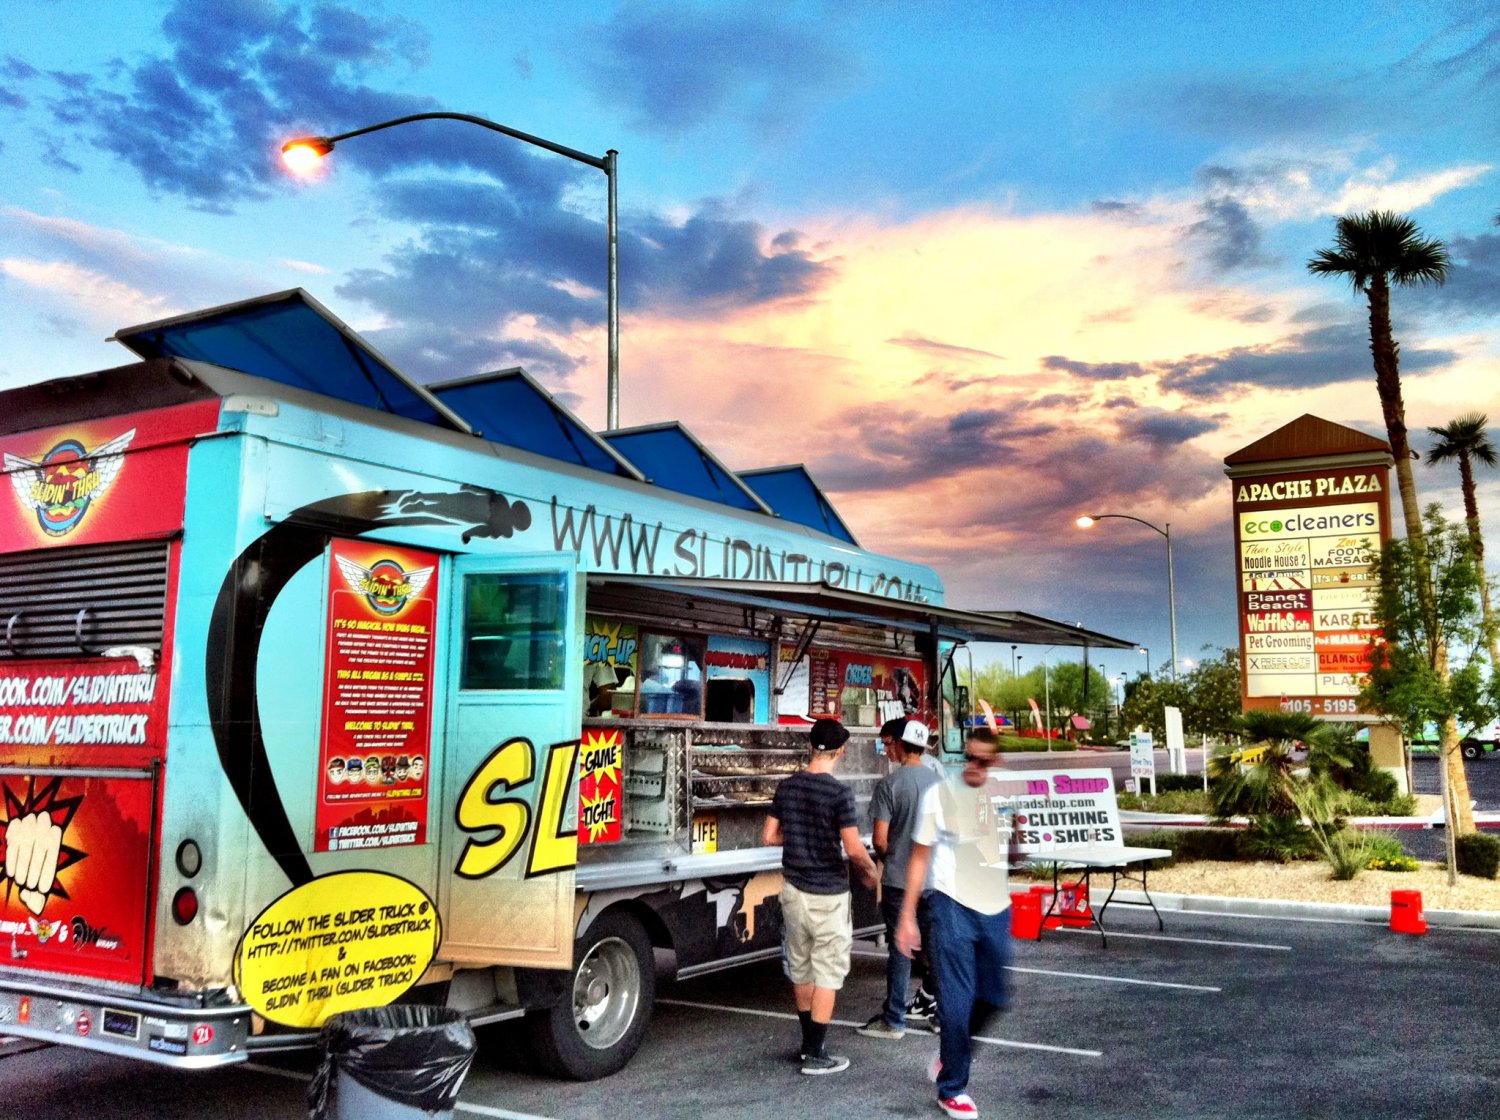 10 Best Taco Truck In Las Vegas 2023 - Buyer's Guide